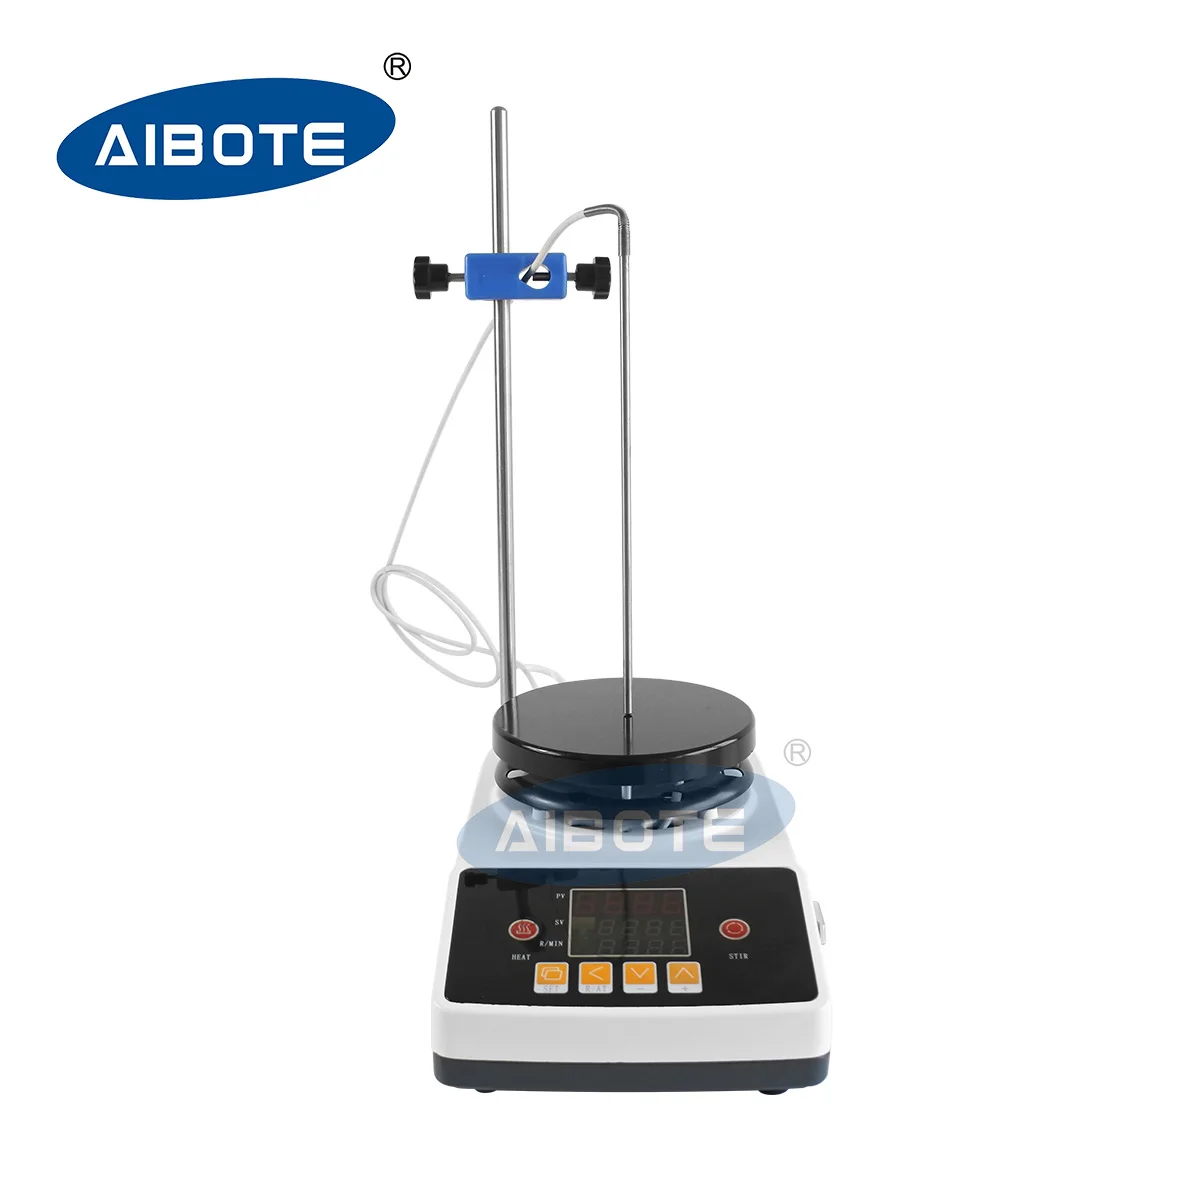 Hot Plate Magnetic Stirrer Mixer Stirring Lab 10L Temperature